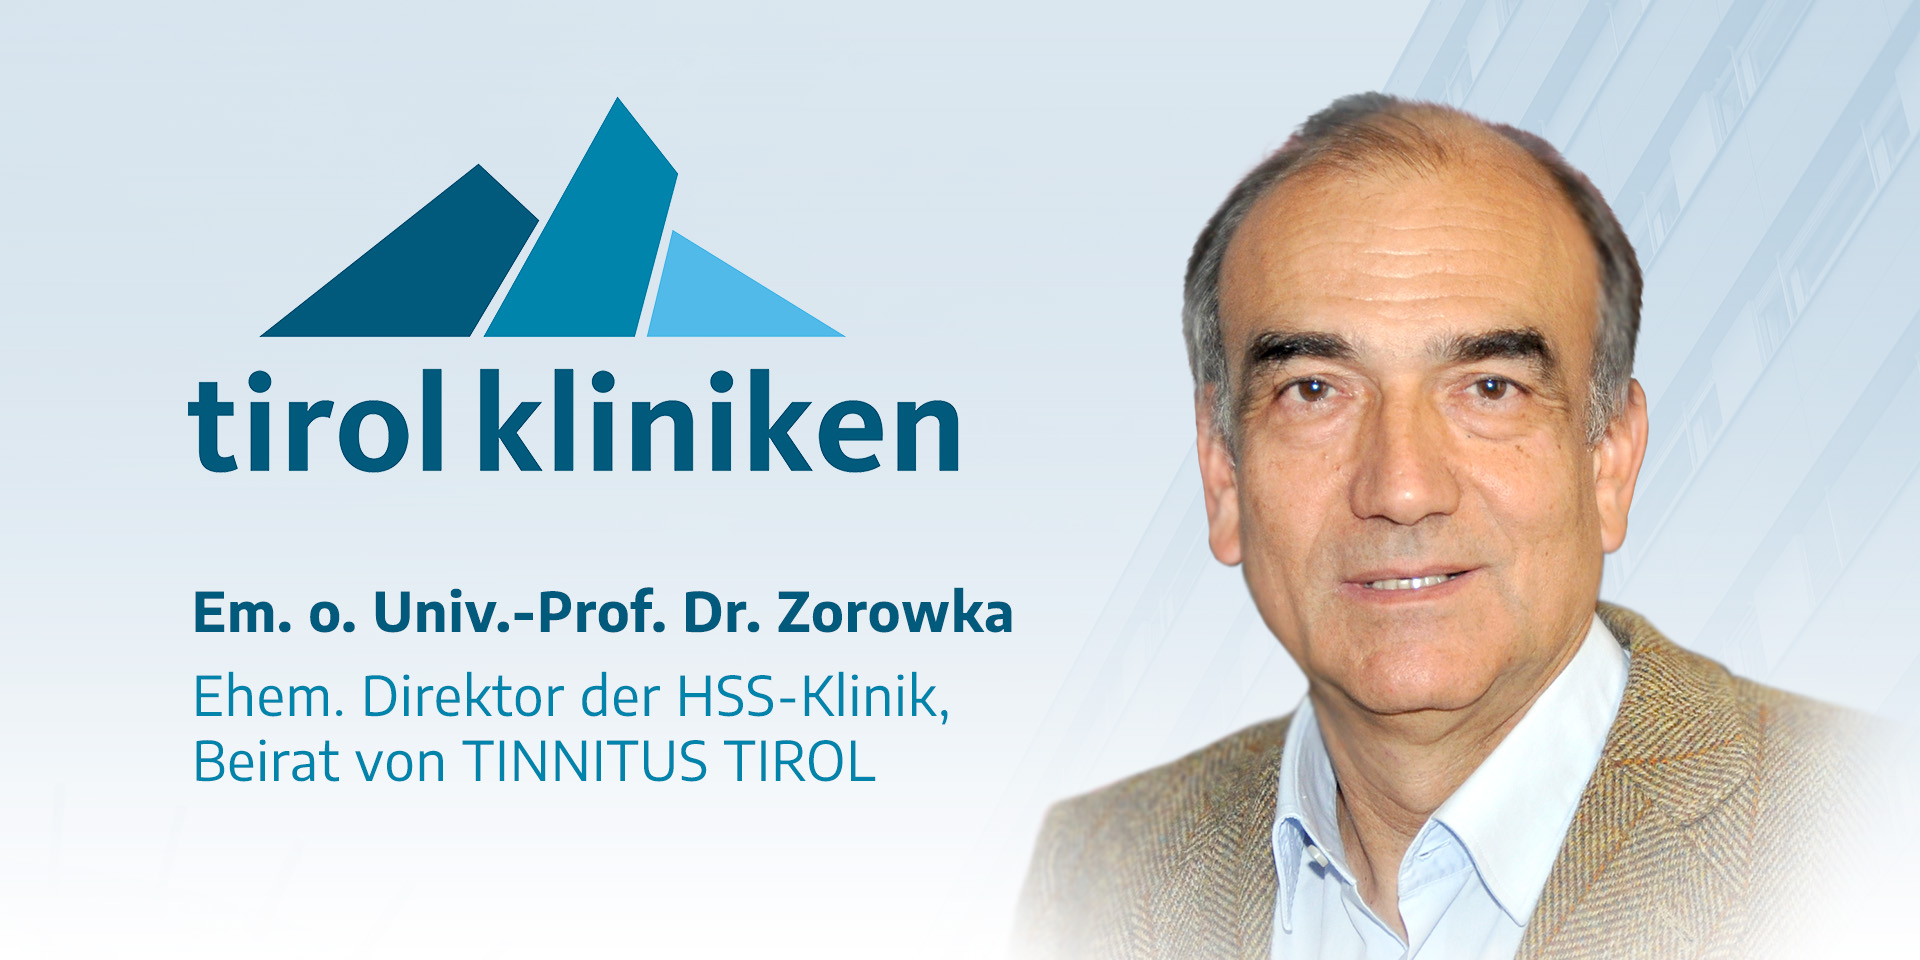 Em. o. Univ.-Prof. Dr. Zorowka ist unser neuer Beirat